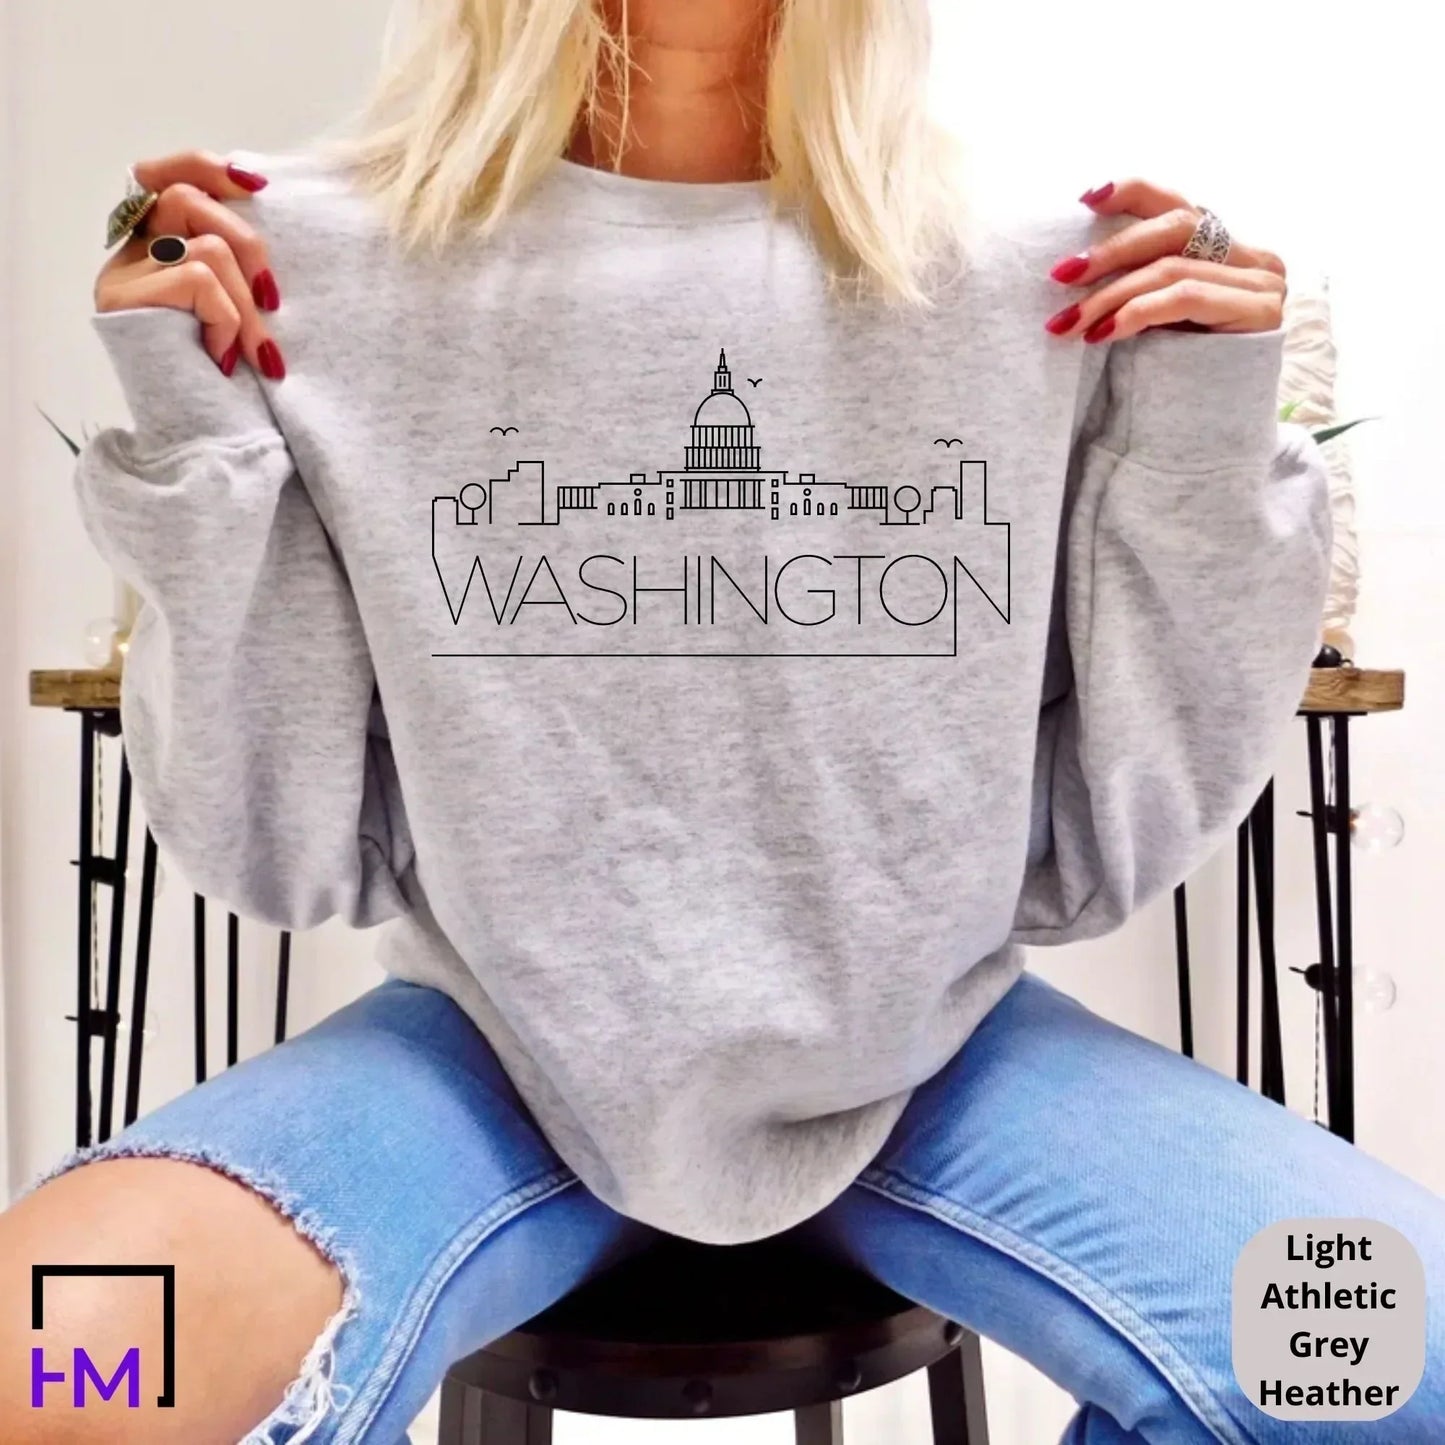 Washington Skyline Shirt, Washington Gift Ideas For Women or Men, Washington Sweatshirt, T-Shirt or Hoodie